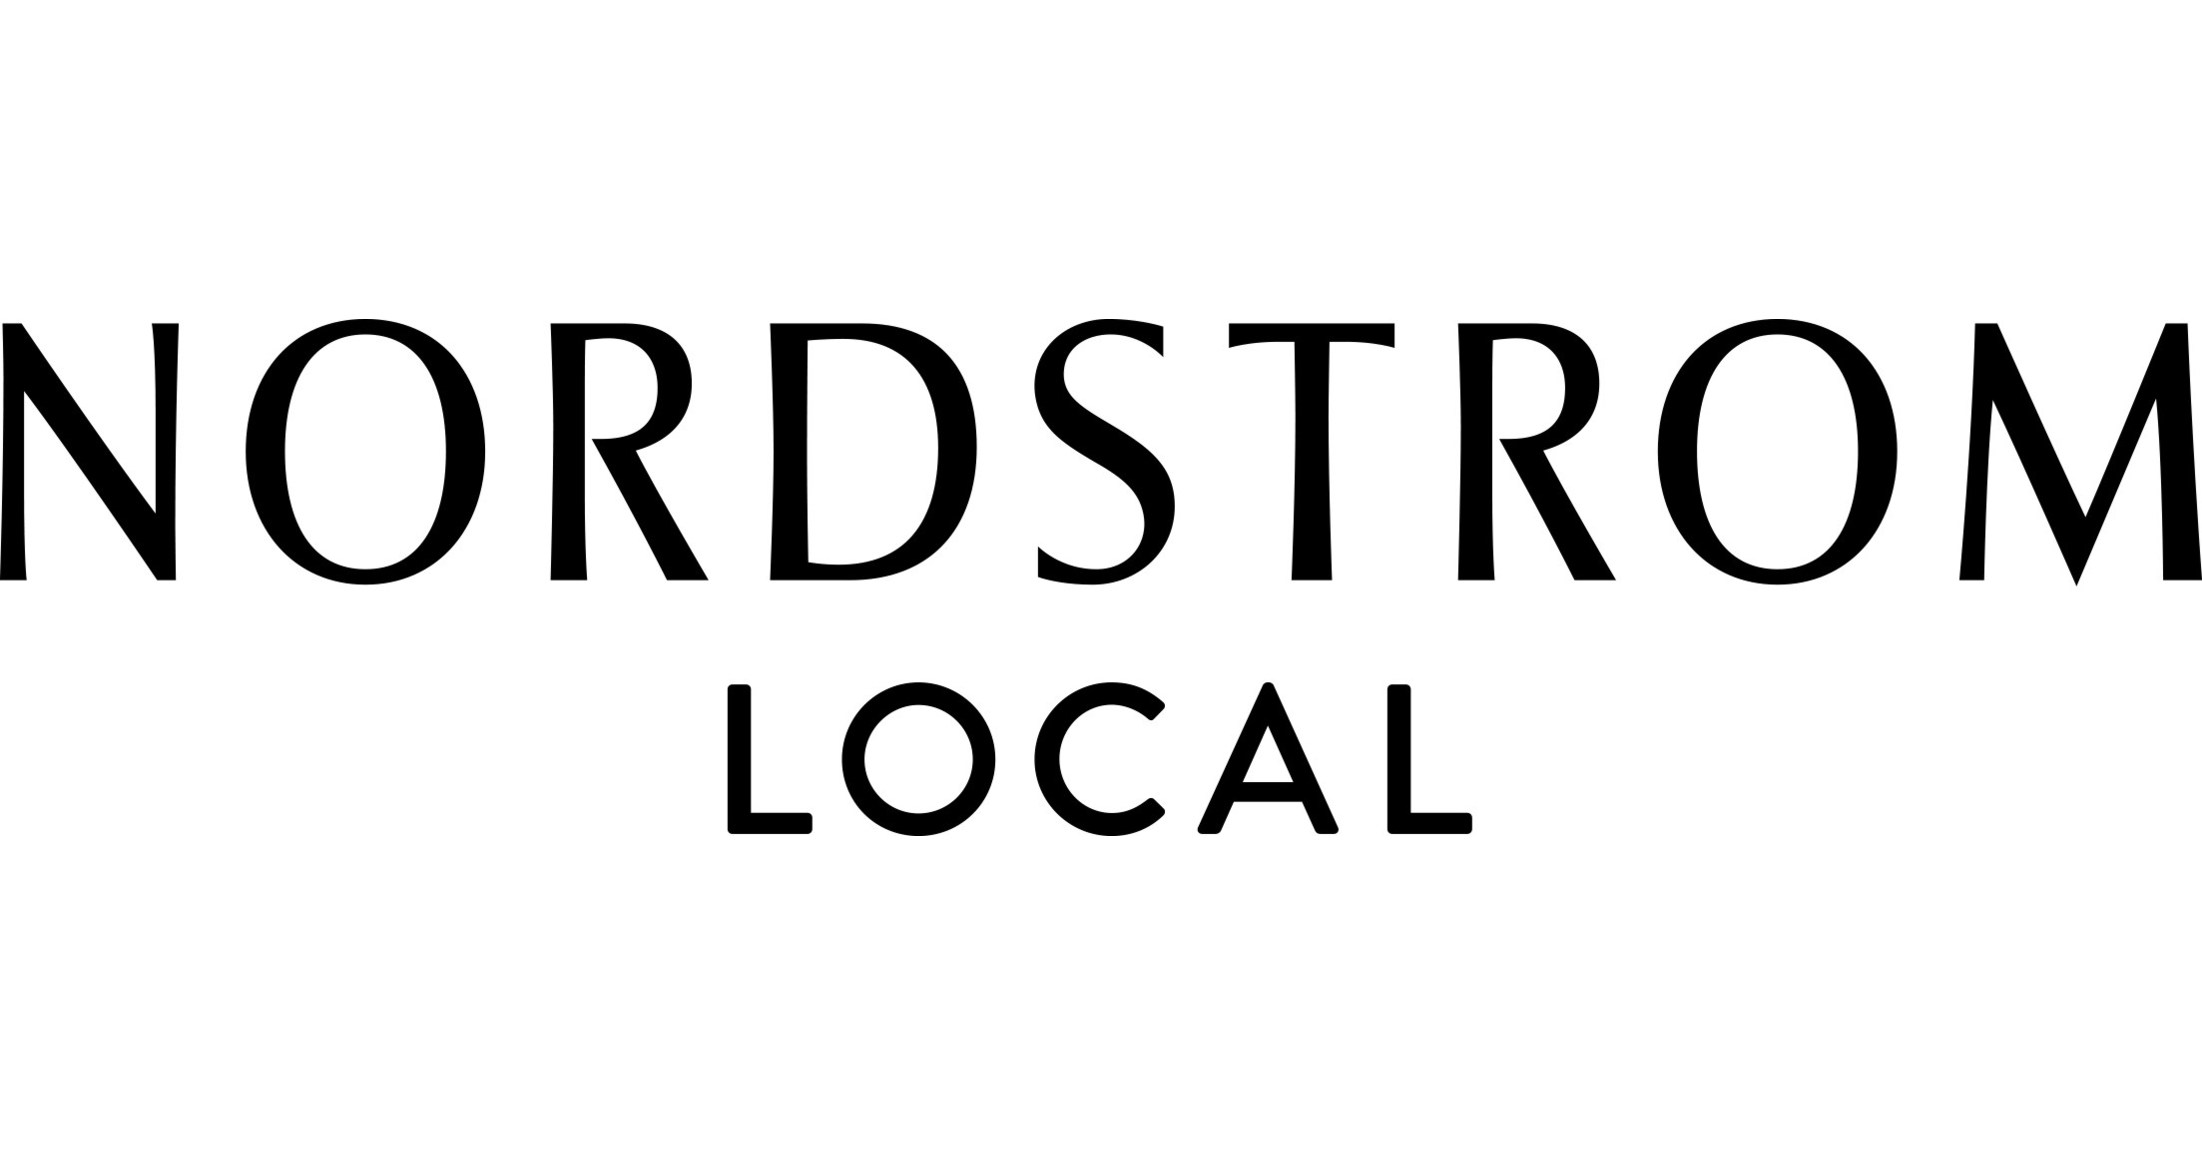 Nordstrom Announces Latest Retail Concept Nordstrom Local